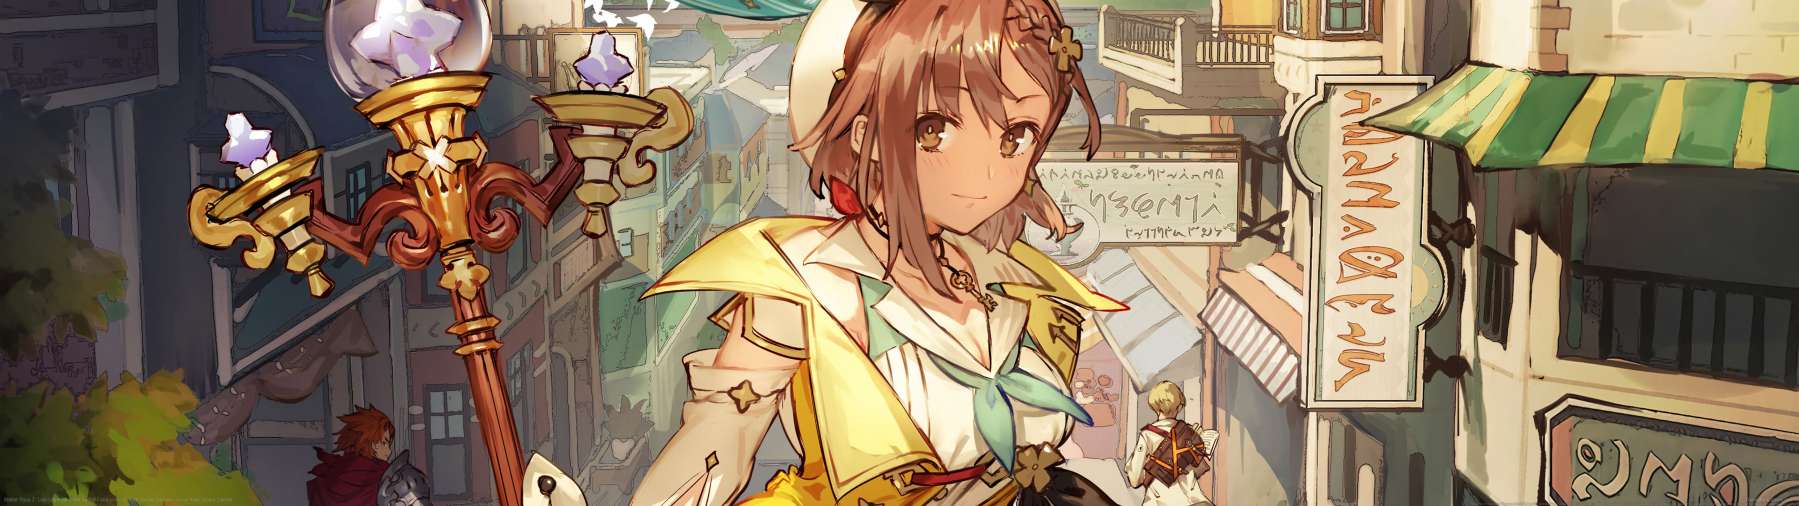 Atelier Ryza 2: Lost Legends & the Secret Fairy wallpaper or background